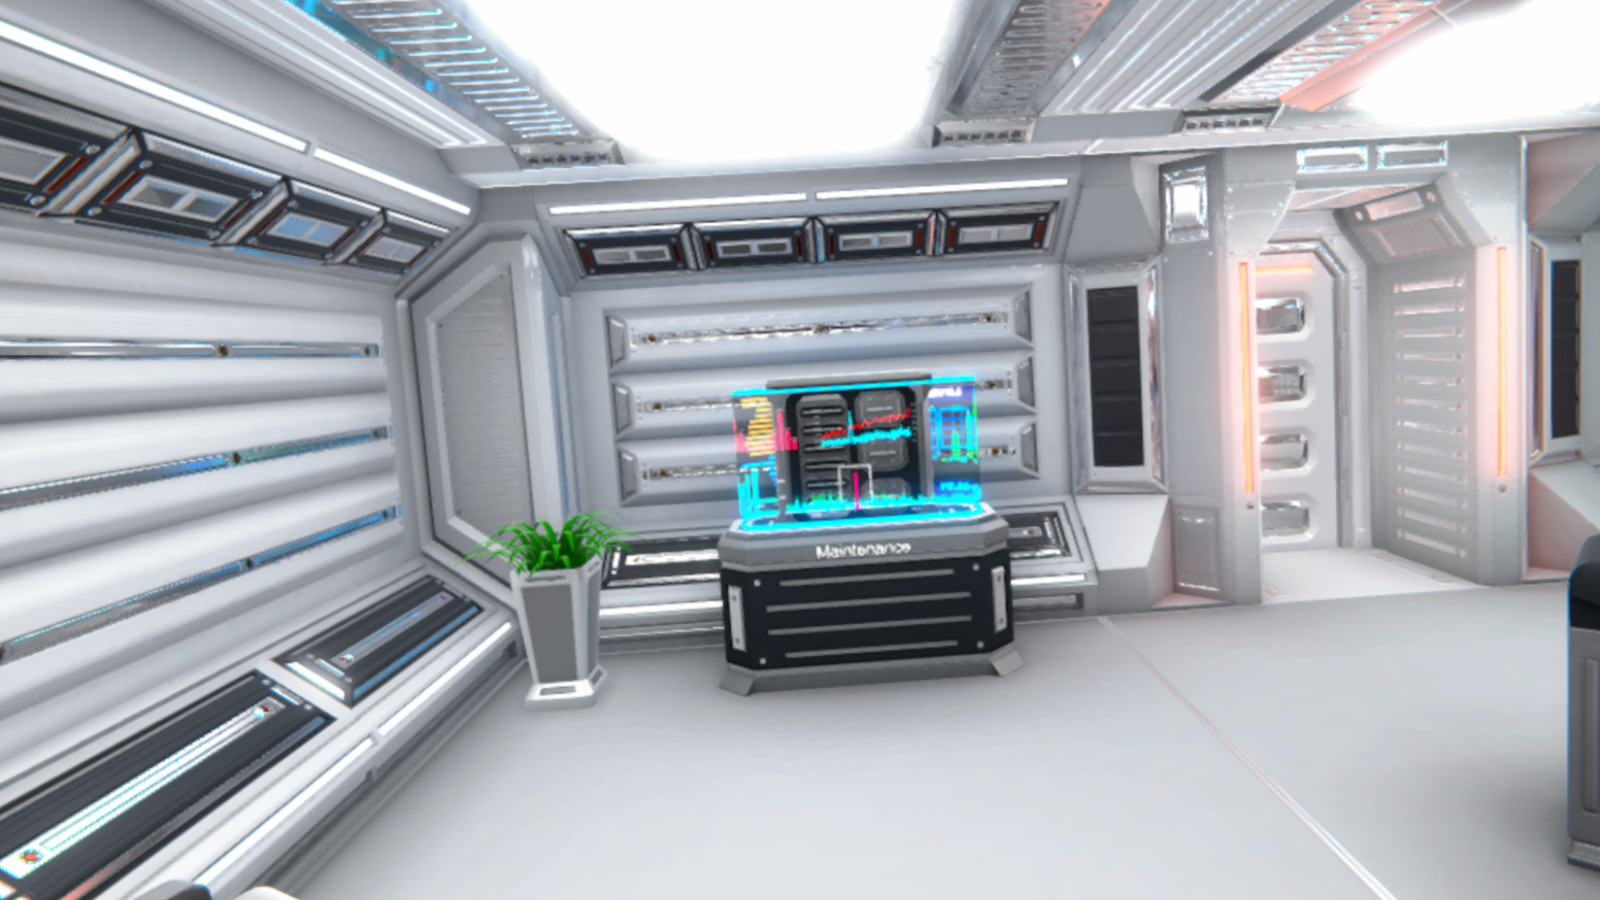 Vr комната metaforce. VR комната. Дизайн новой игровой станции. Escape Room VR. VR игры РЭК рум.